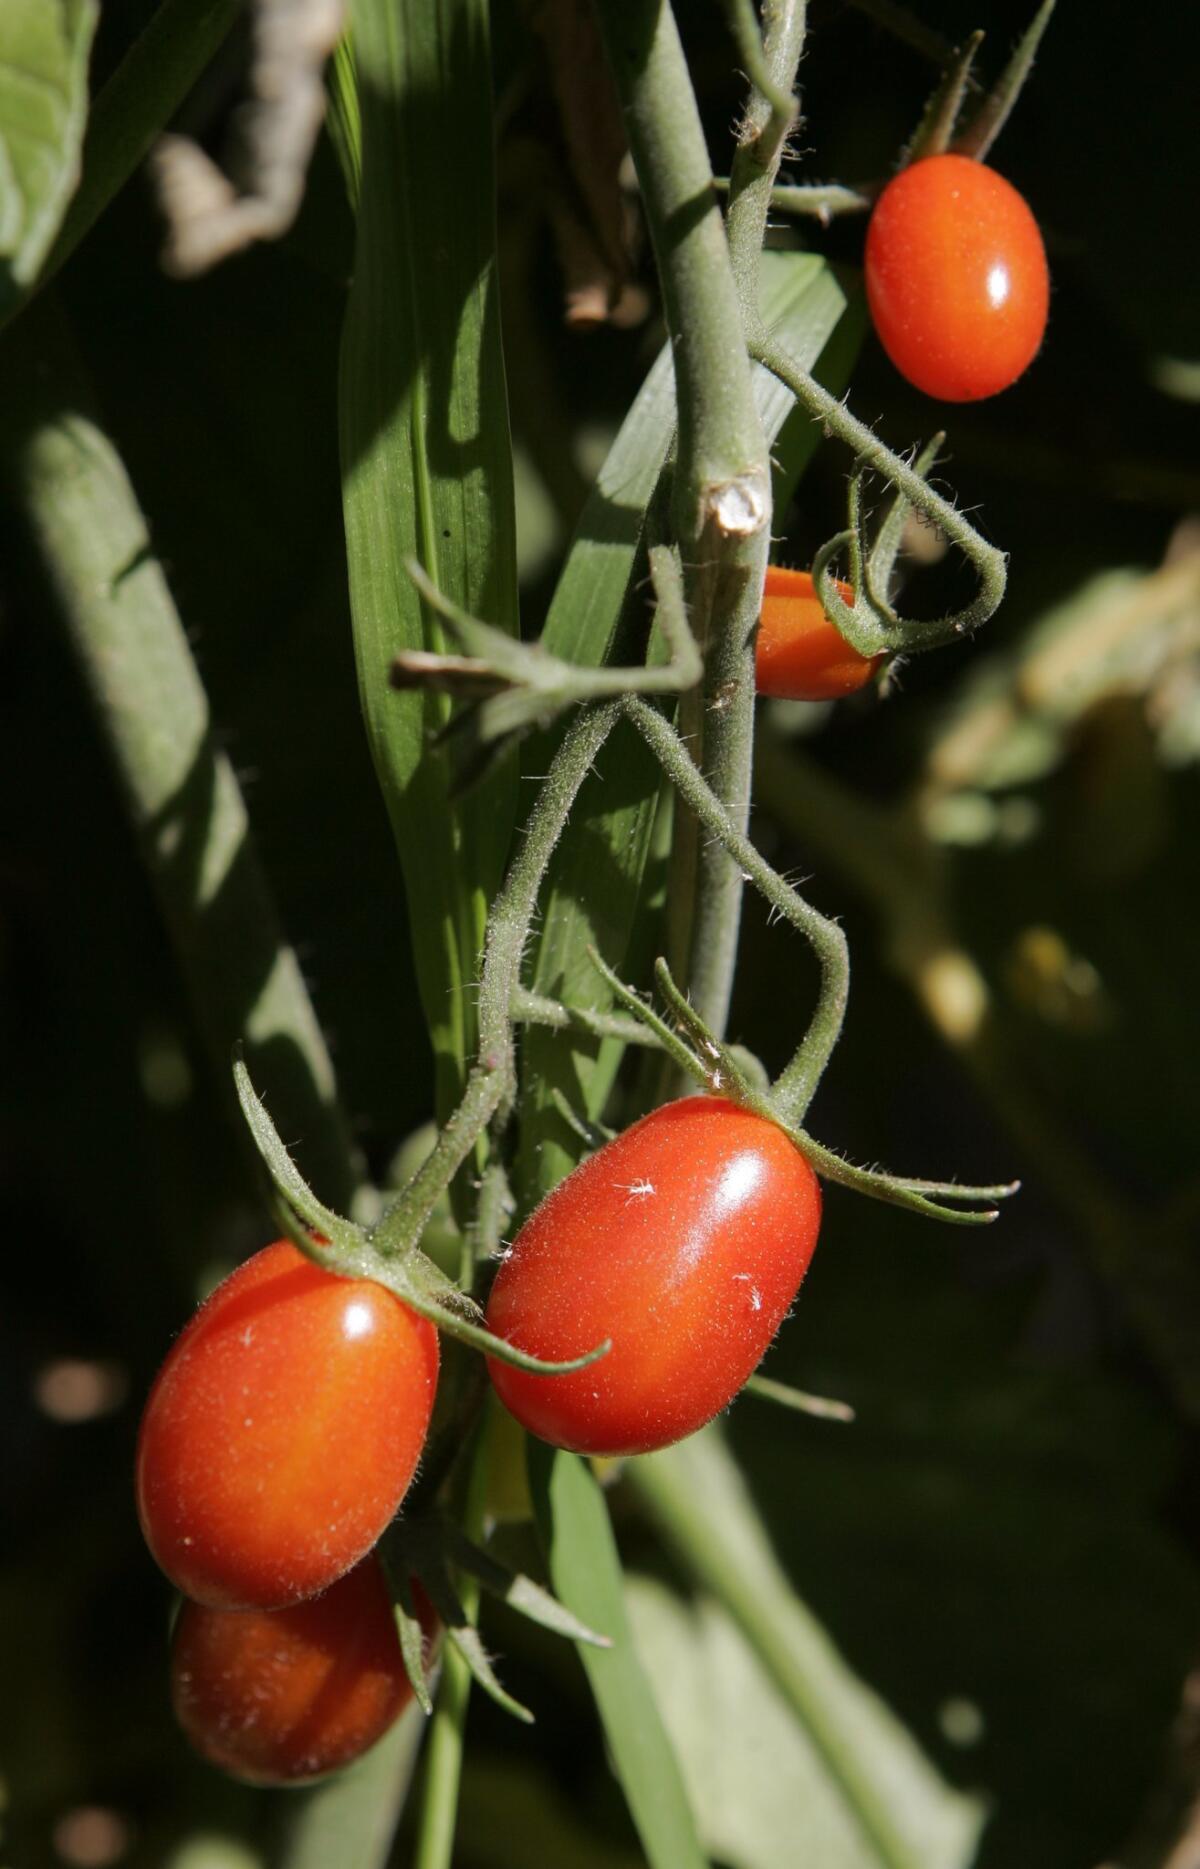 Vine-ripened advice on growing tomatoes - The San Diego Union-Tribune